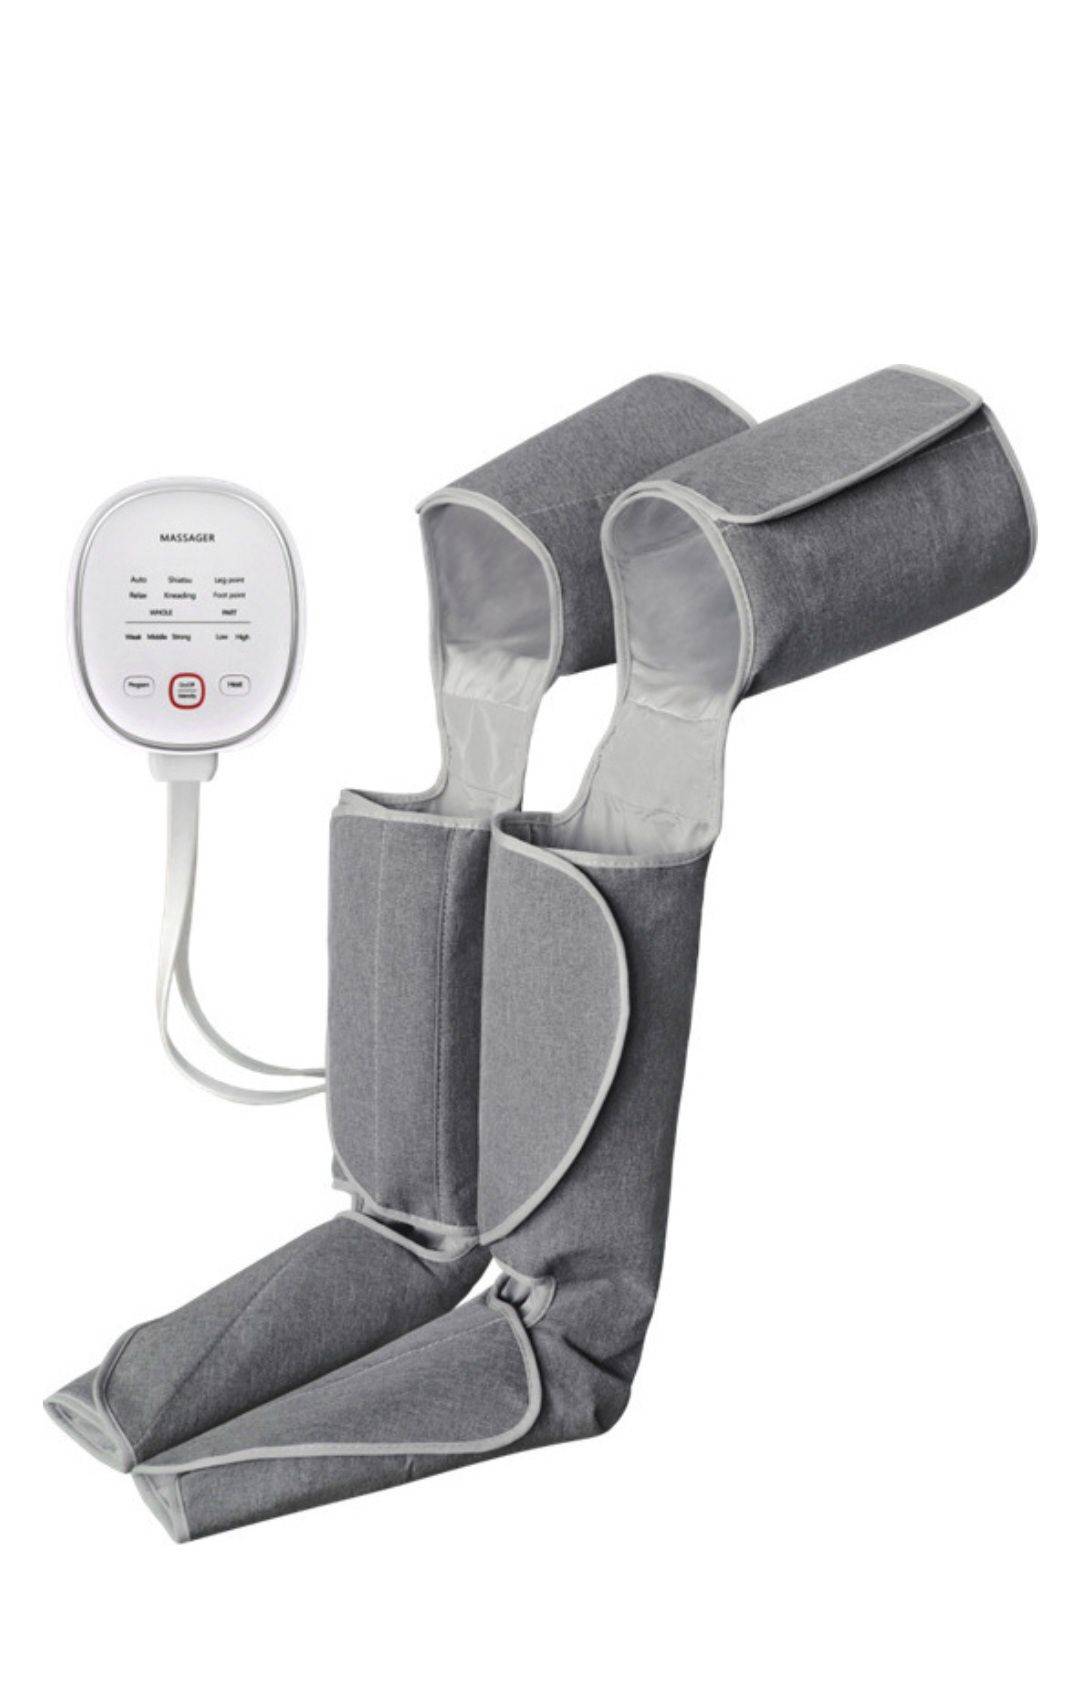 Массажер Intelligent Air Compression Massager GRAY1 ручной воздушно-ко